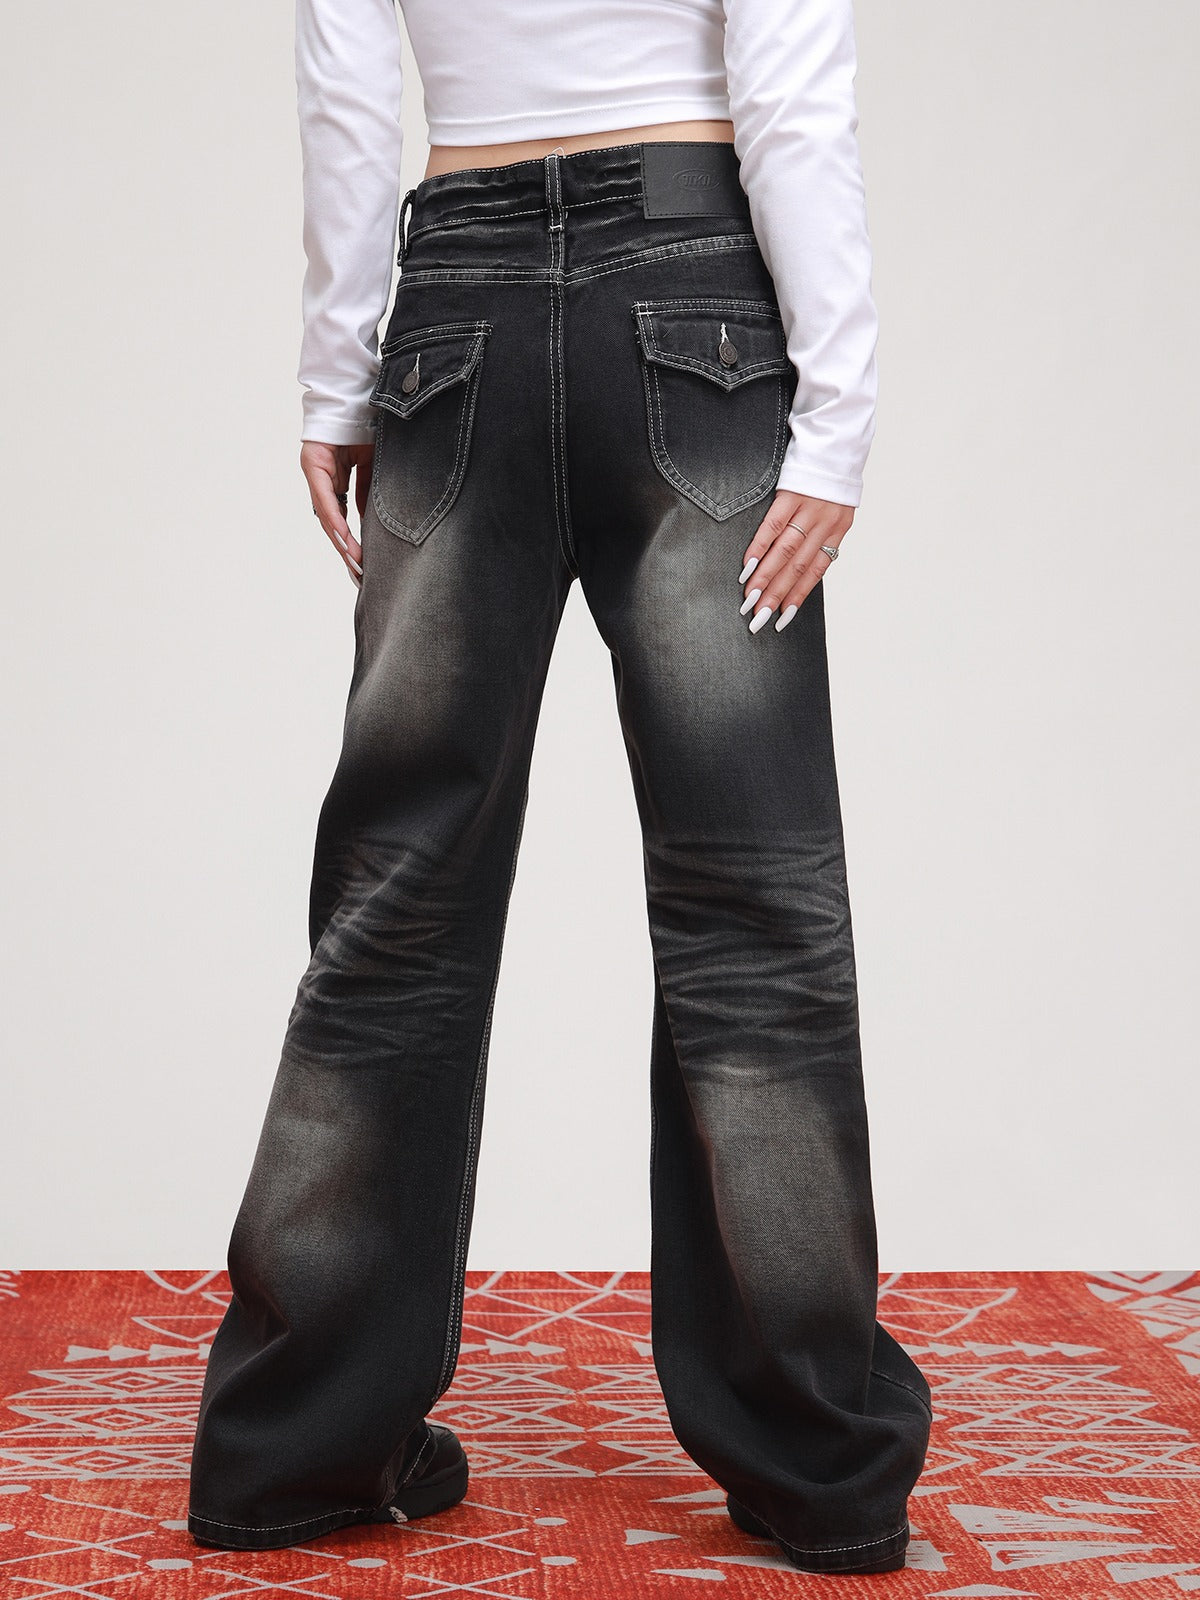 American Vintage Washed Mop Black Jeans Pants